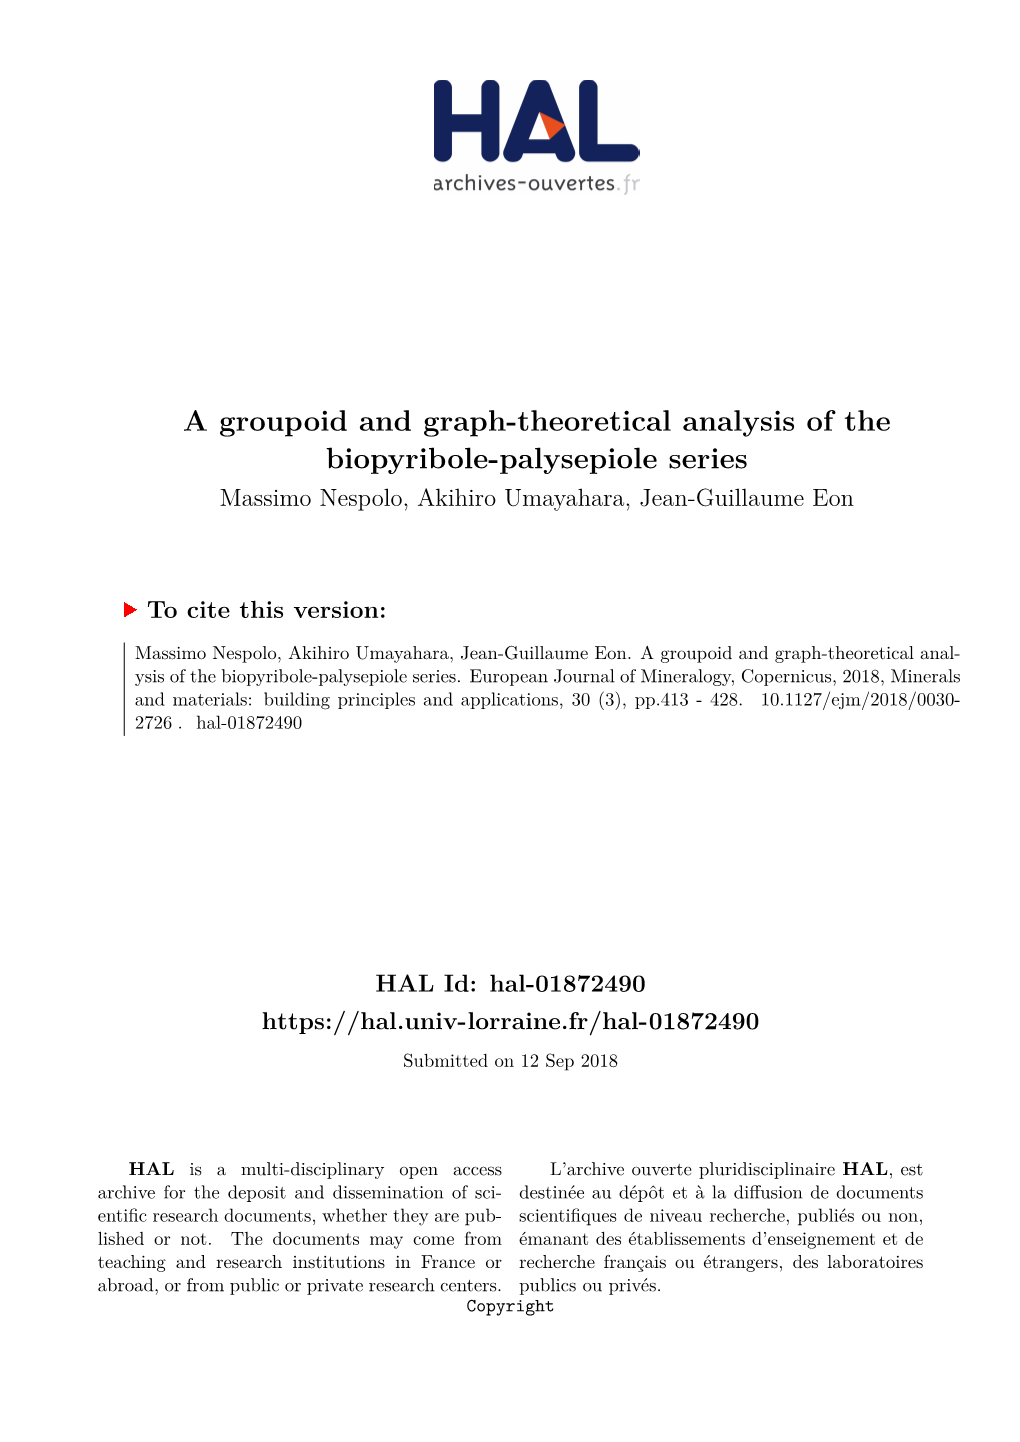 A Groupoid and Graph-Theoretical Analysis of the Biopyribole-Palysepiole Series Massimo Nespolo, Akihiro Umayahara, Jean-Guillaume Eon